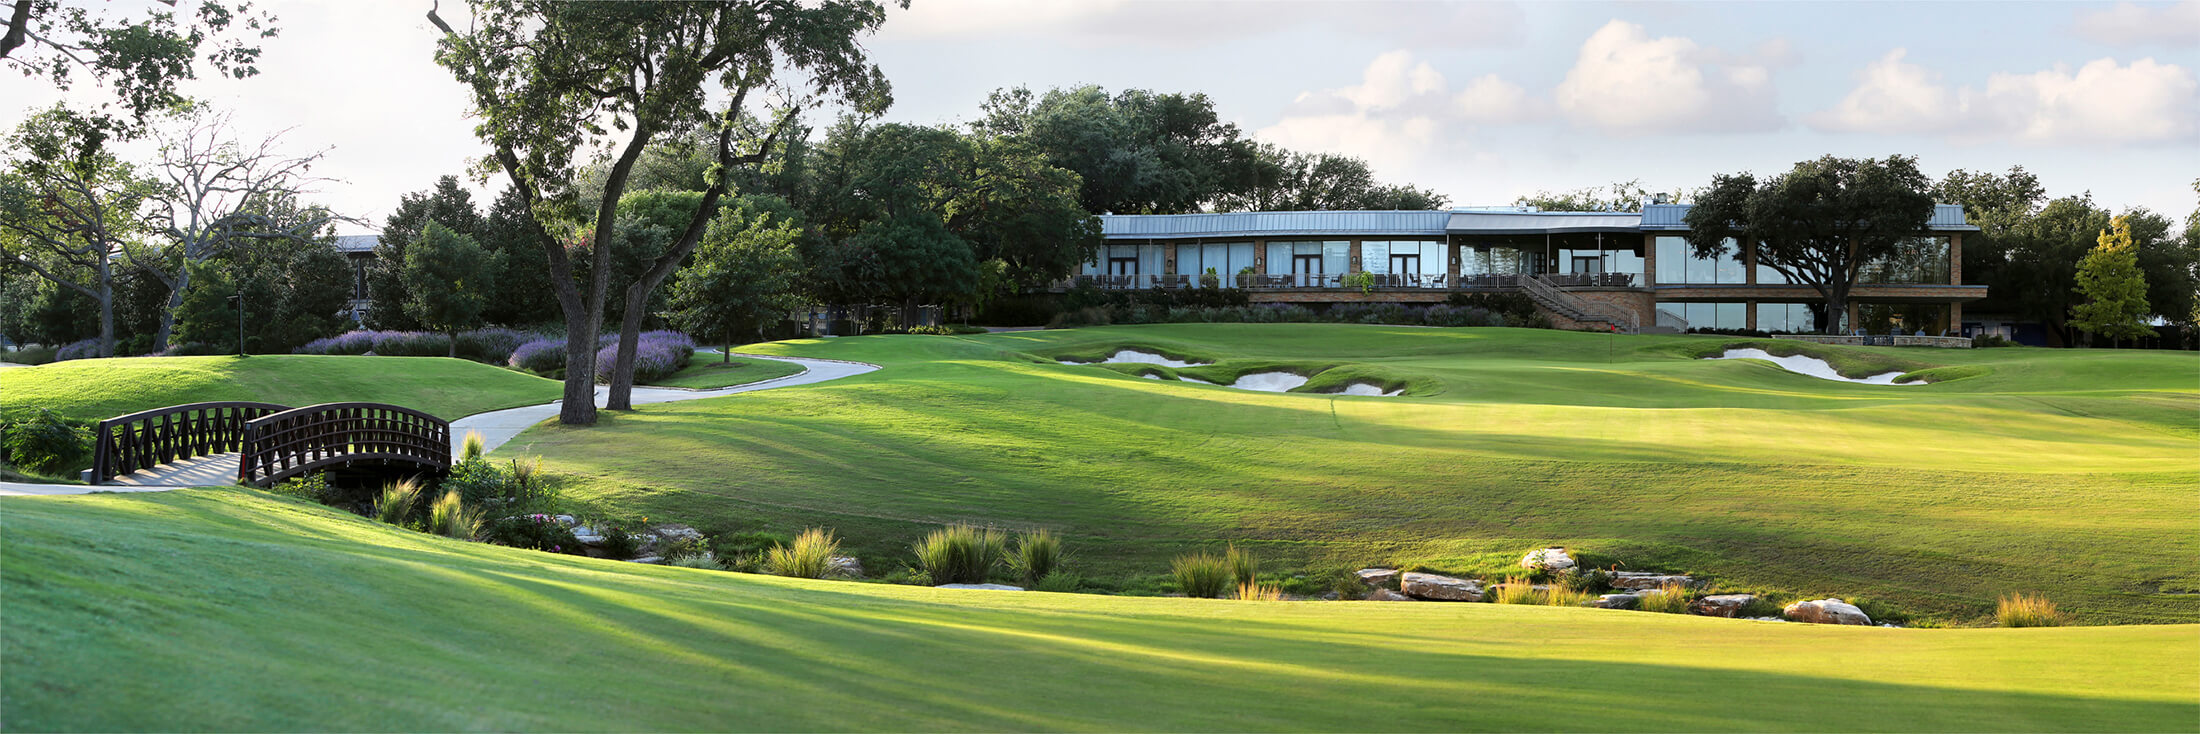 Golf Course Image - Northwood Club No. 18